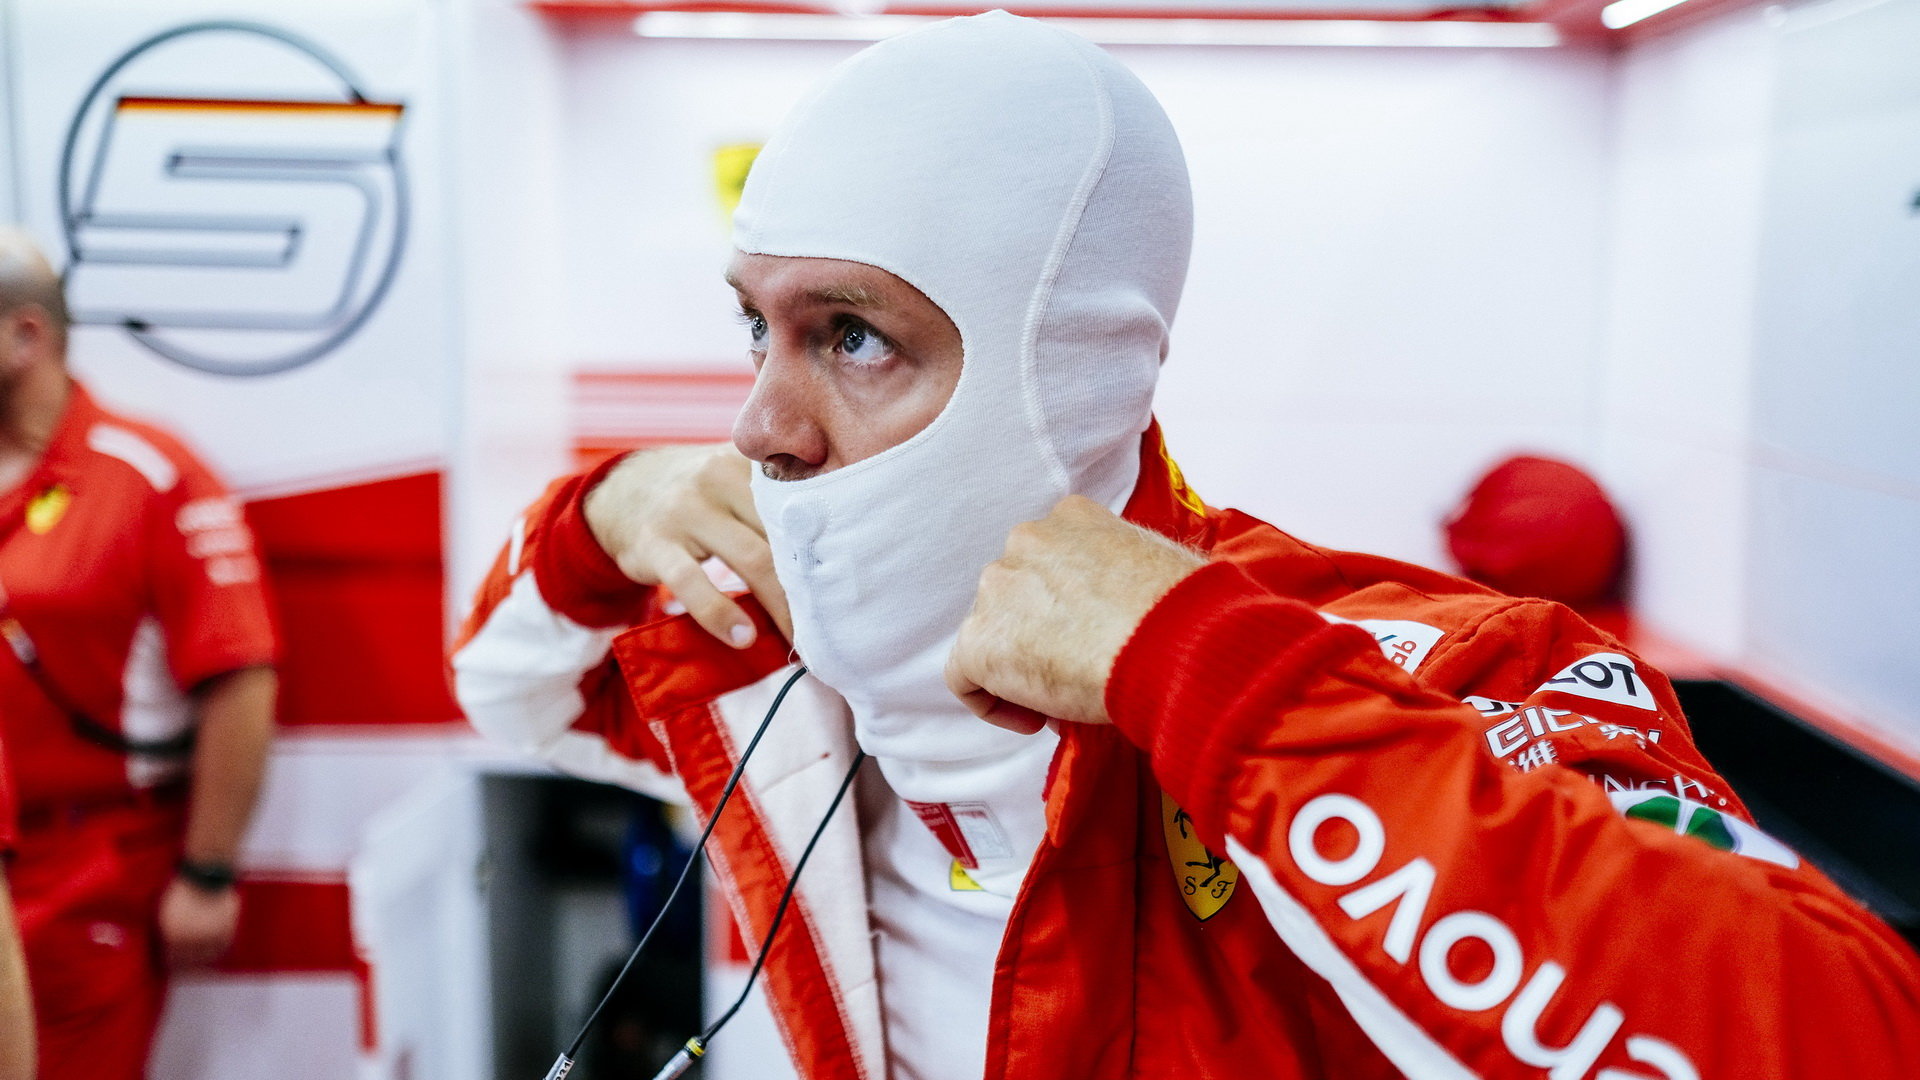 "Máme plán" - Sebastian Vettel stále věří